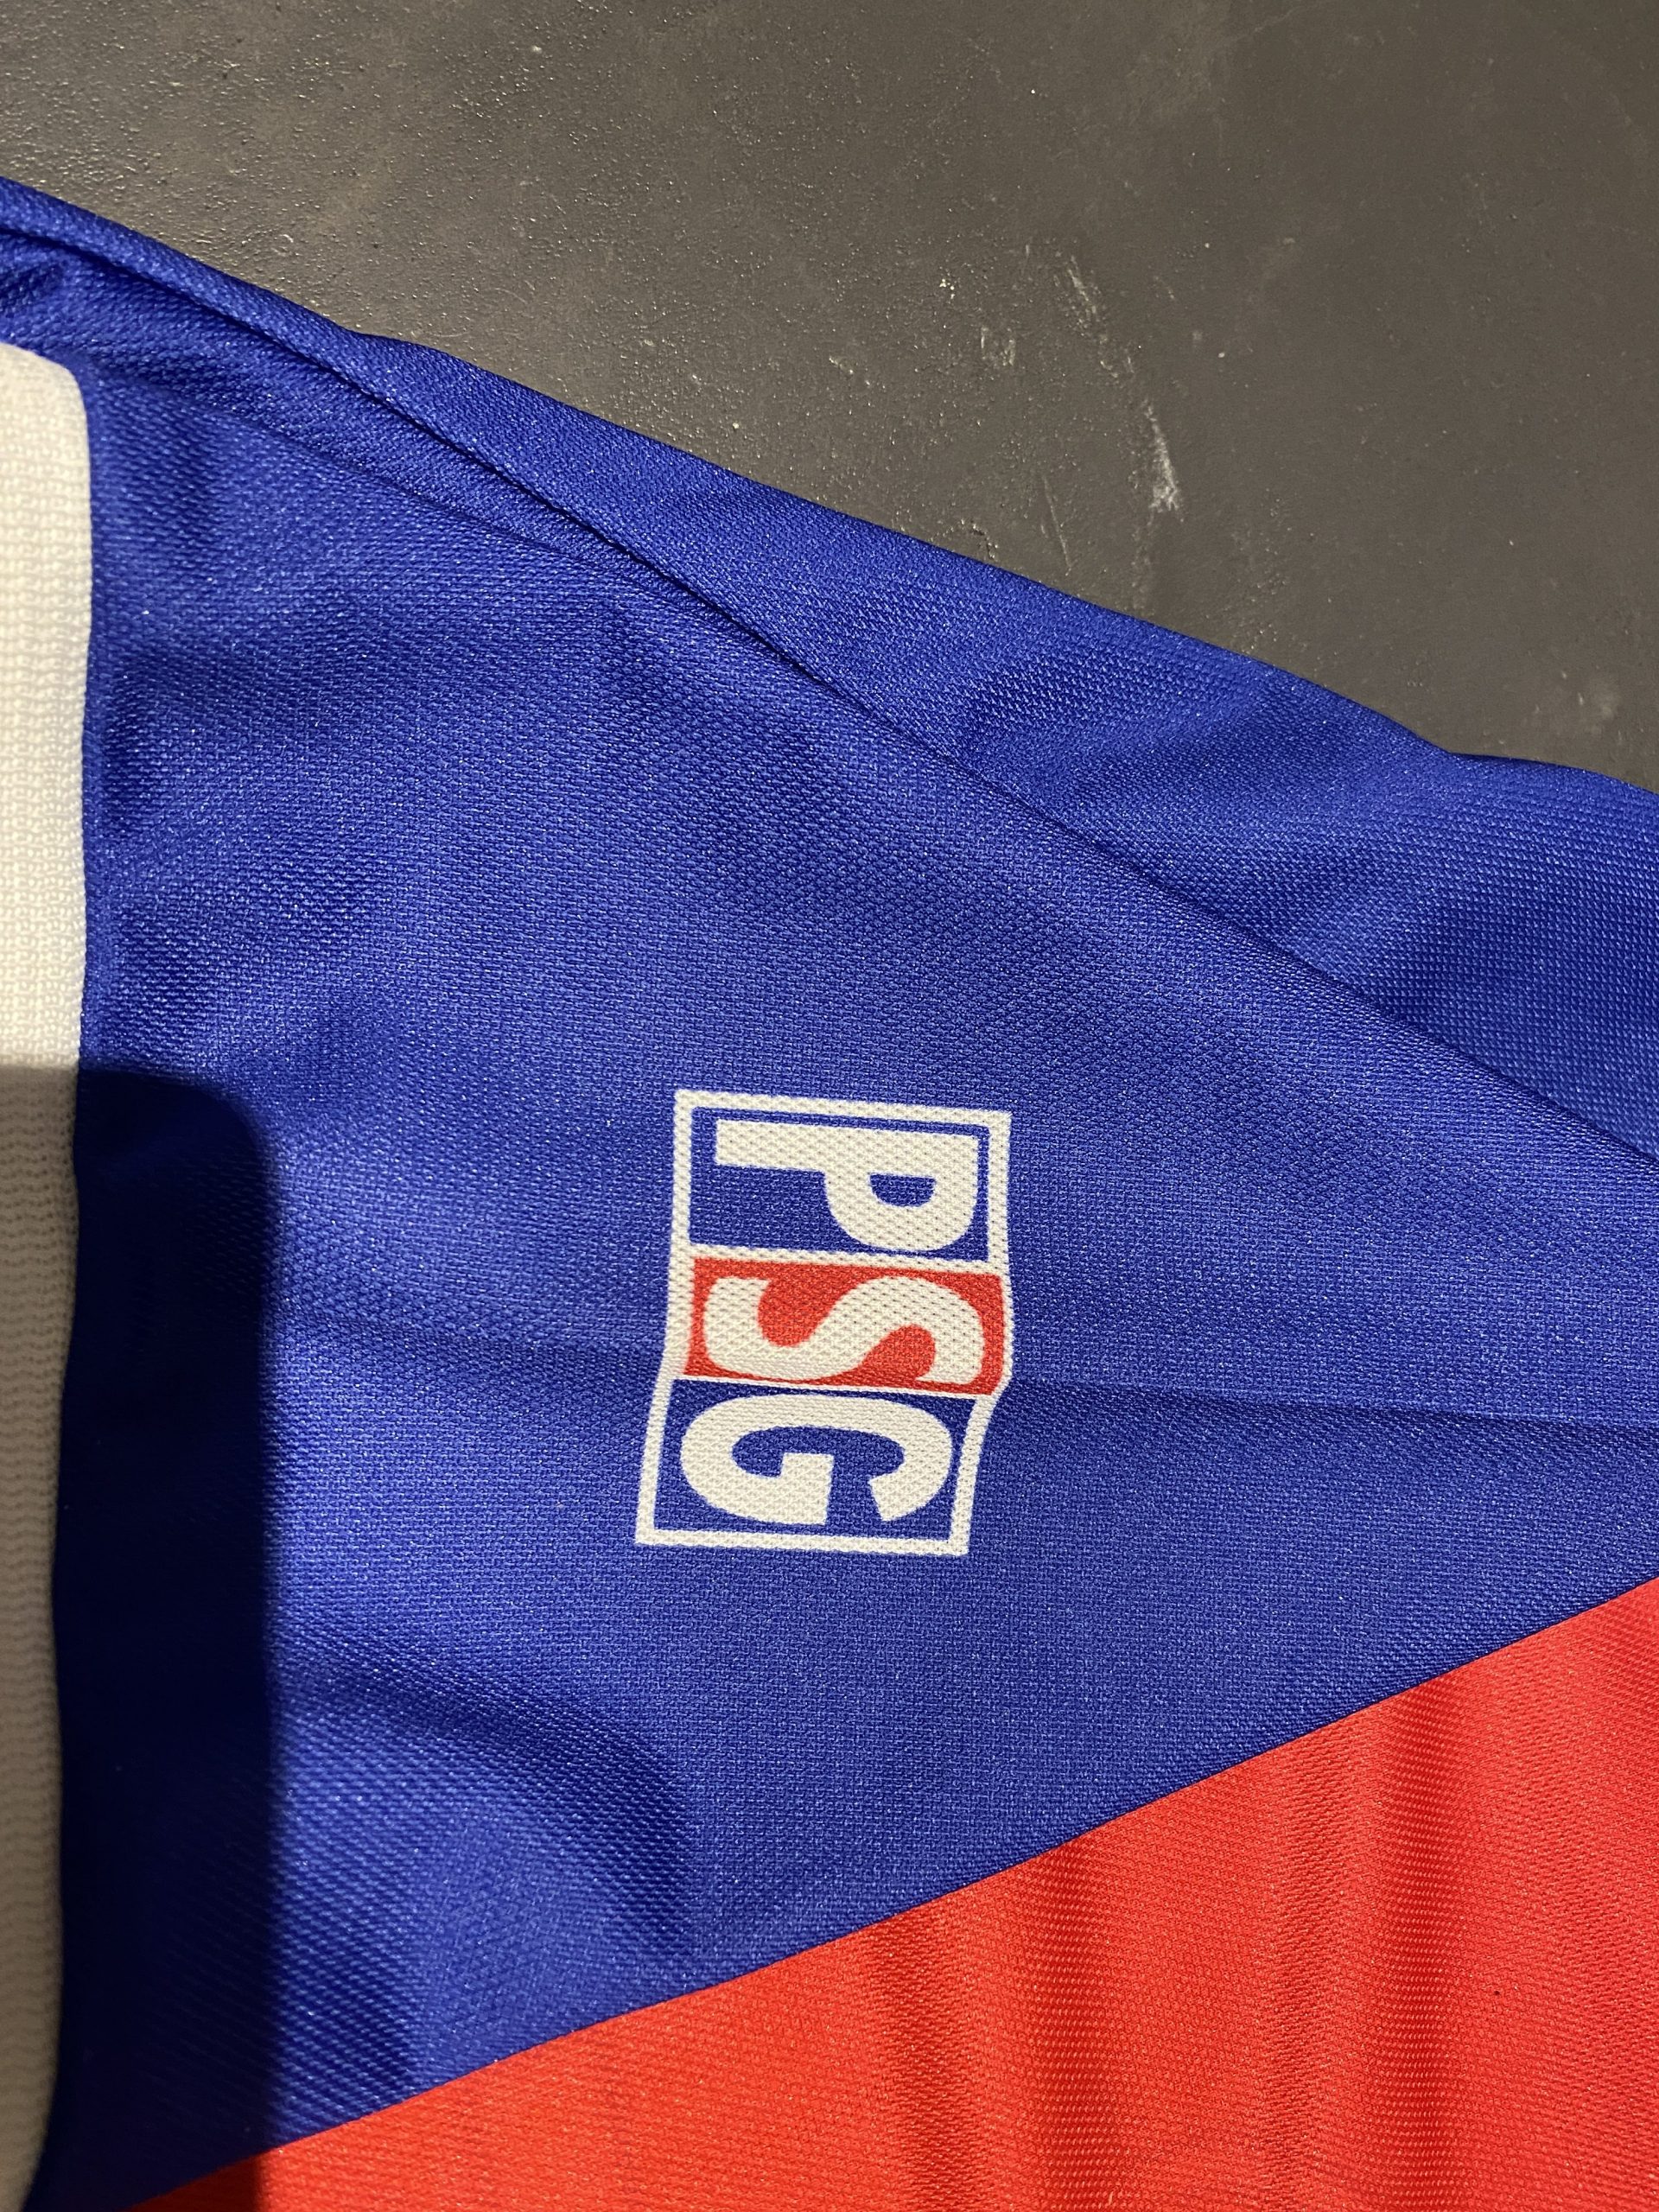 Maillot PSG 97/98 - XL - YFS - Your Football Shirt